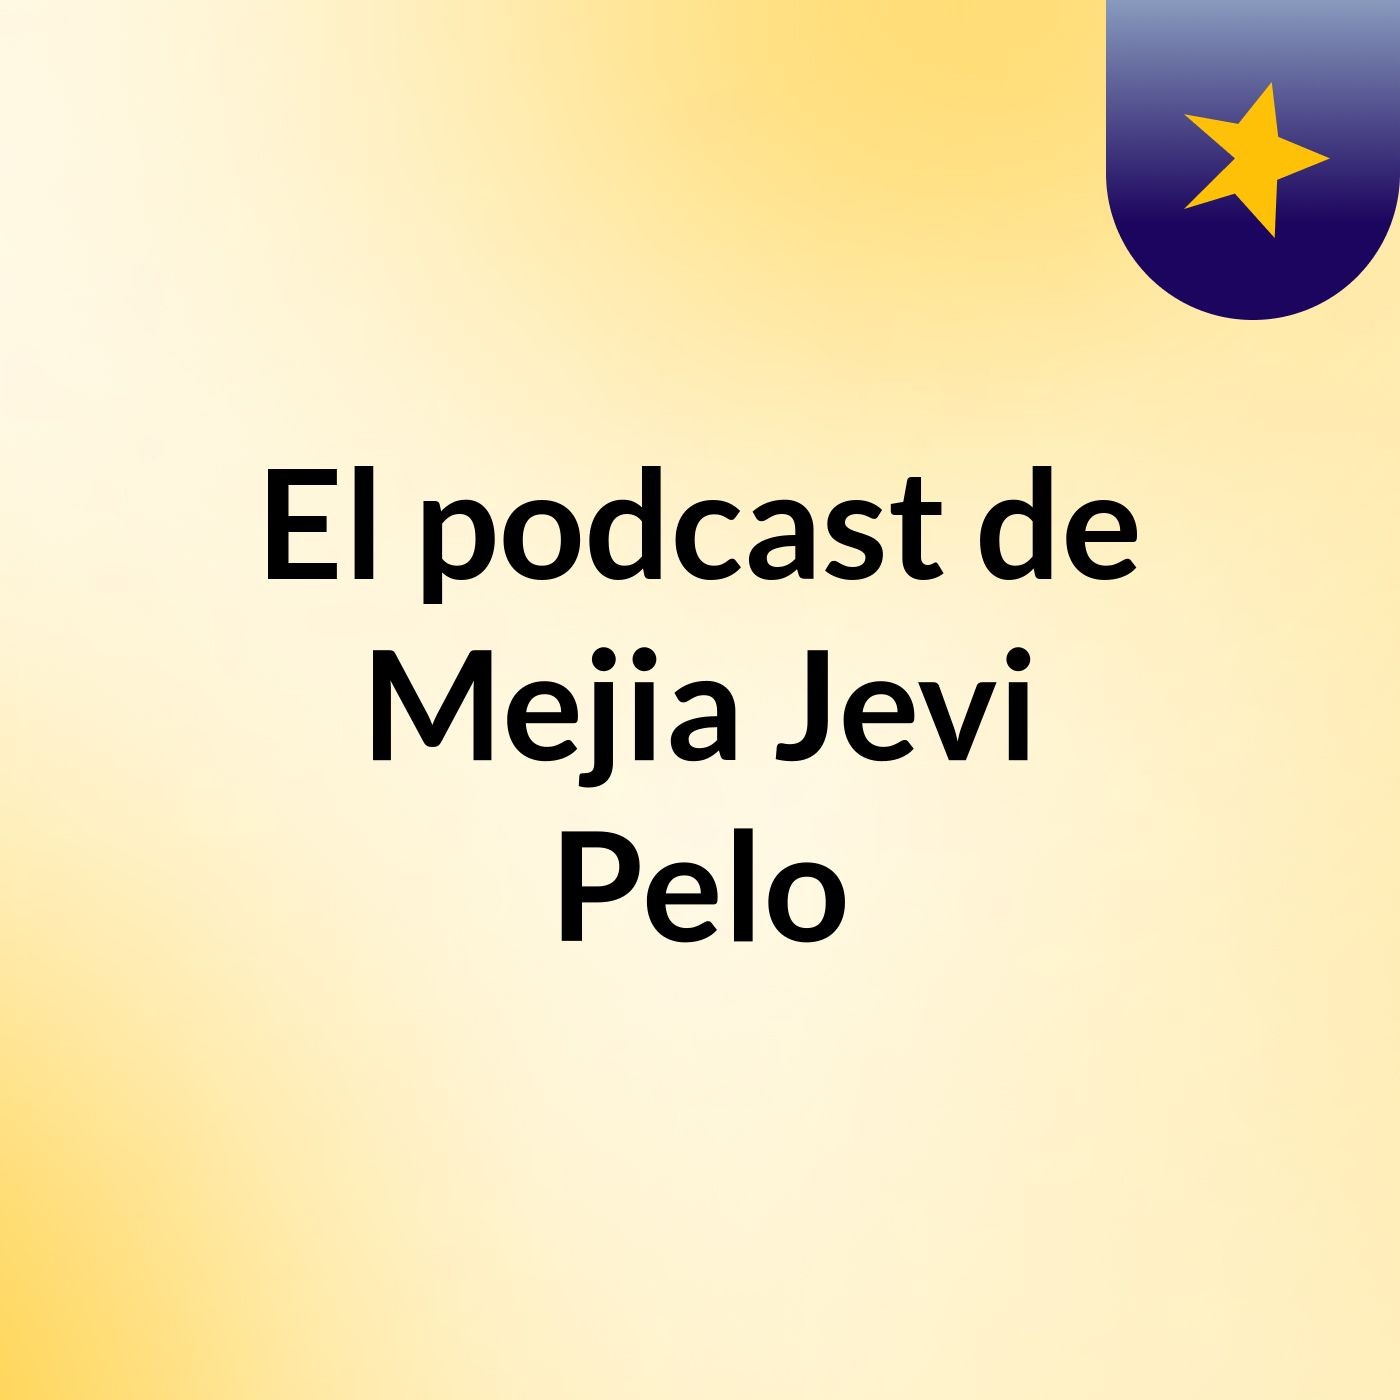 Episodio 9 - El podcast de Mejia Jevi Pelo